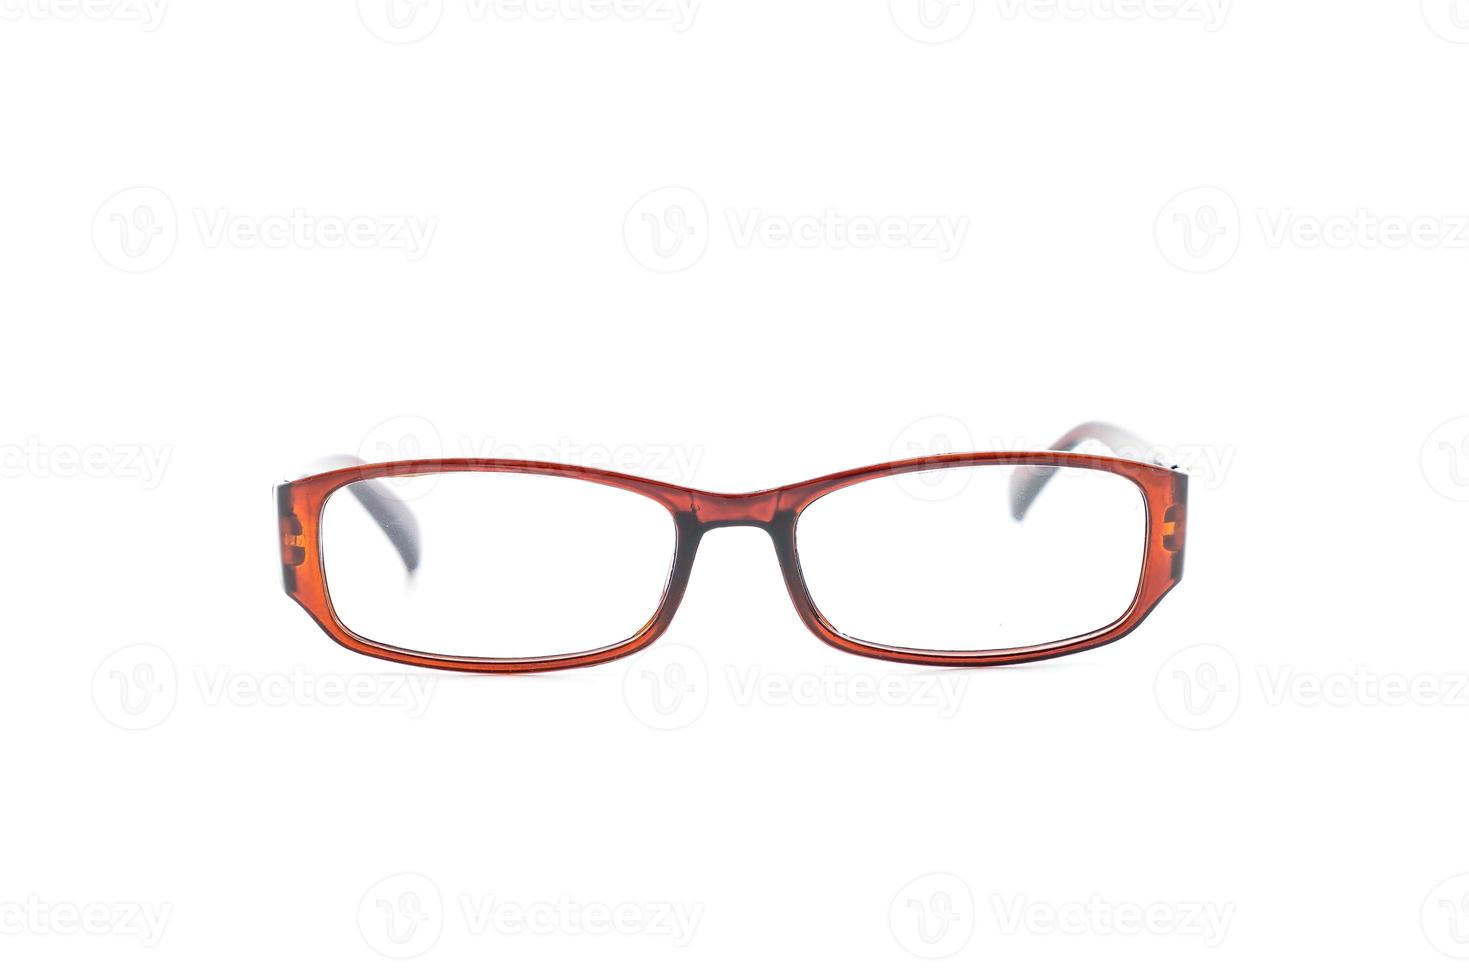 glasögon, glasögon eller glasögon på vit bakgrund foto